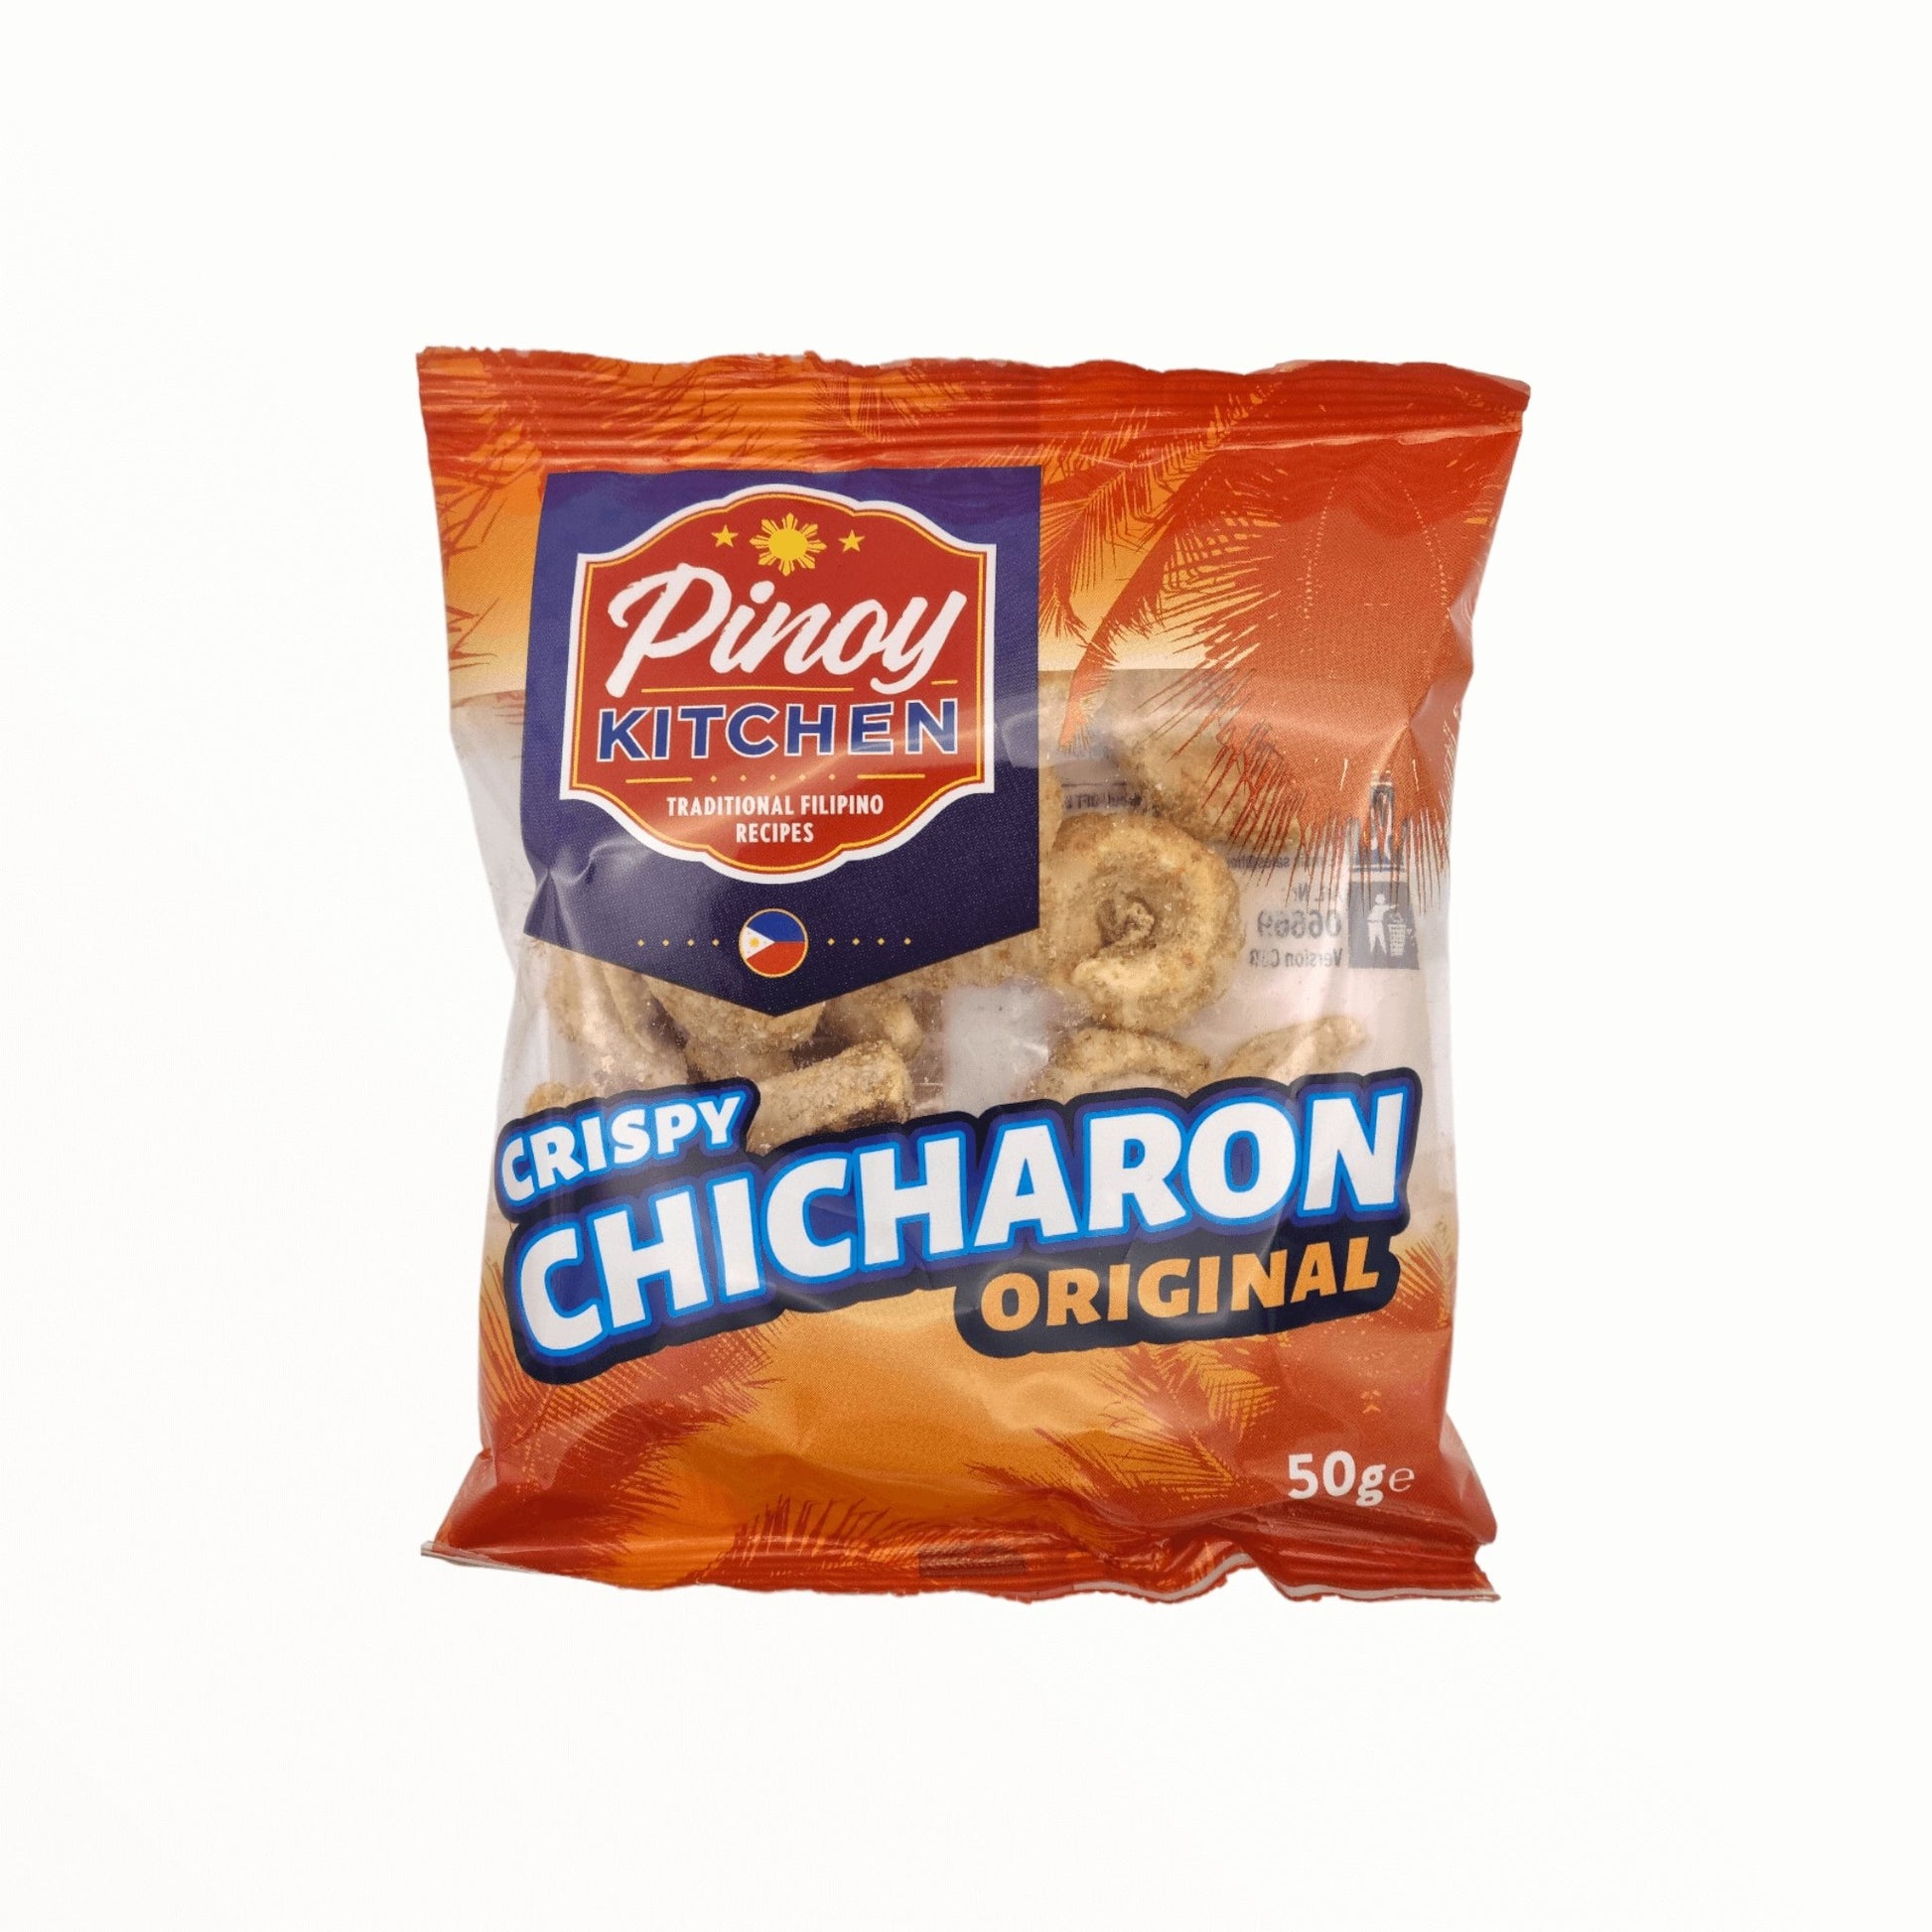 Crispy Chicharon Original 50g - Mabuhay Pinoy Asia Shop